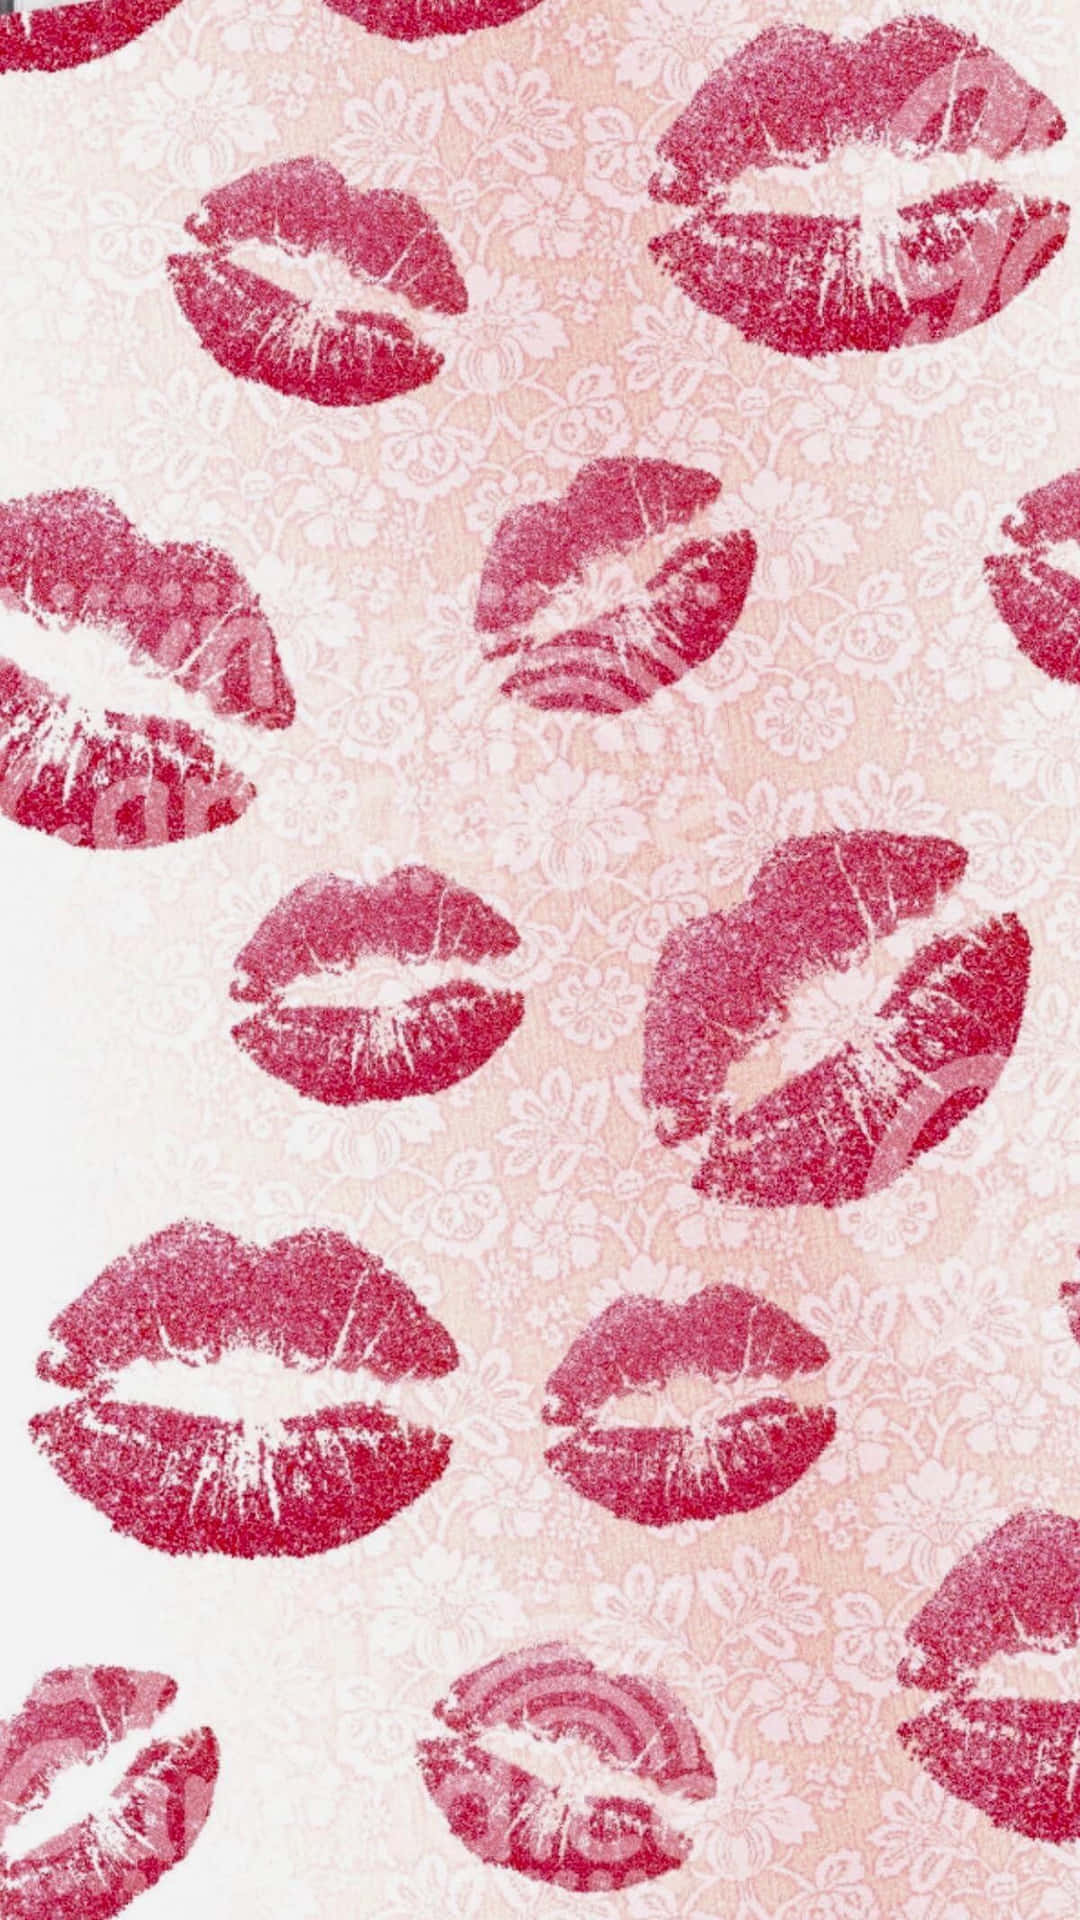 Captivating Pink Lips Wallpaper